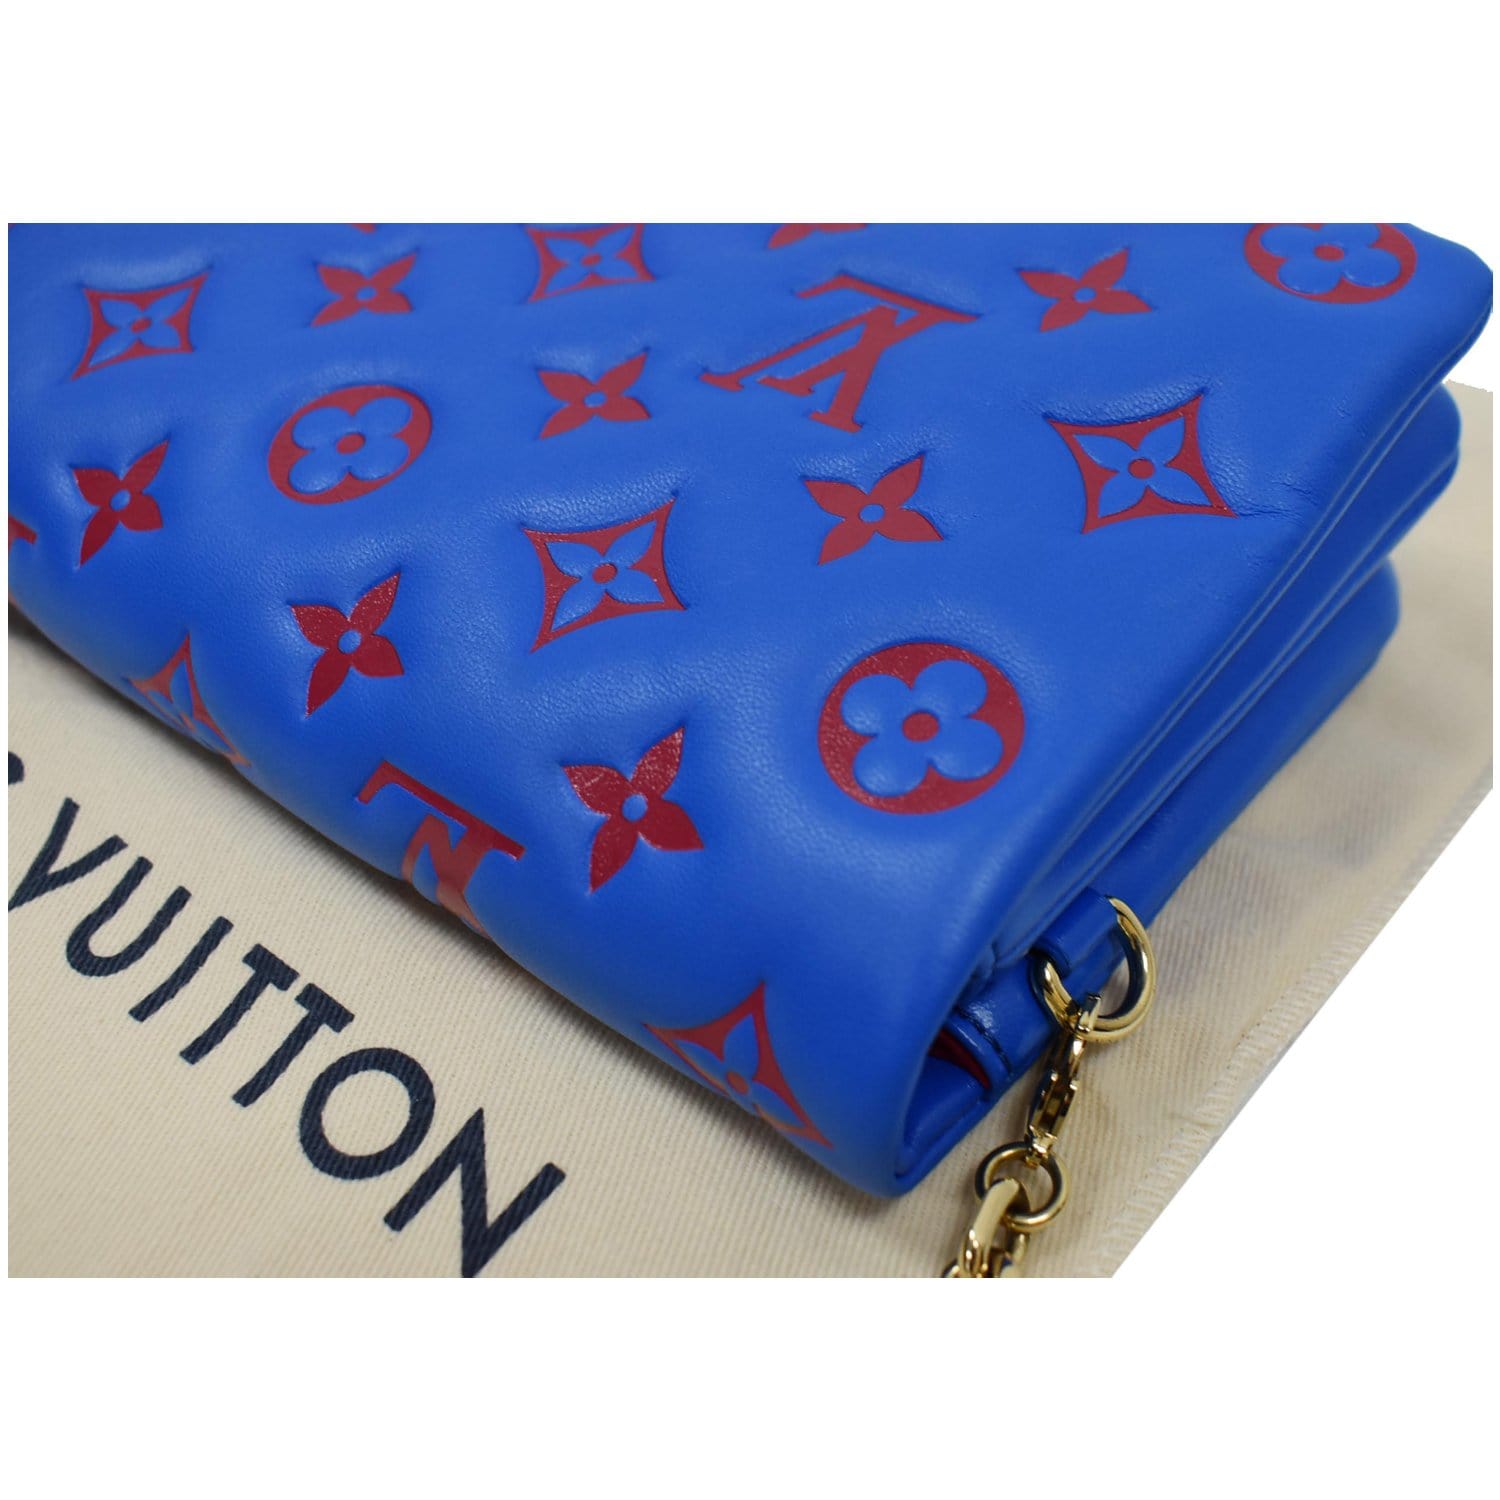 Louis Vuitton Coussin Pochette Monogram Embossed Lambskin Blue 2196904